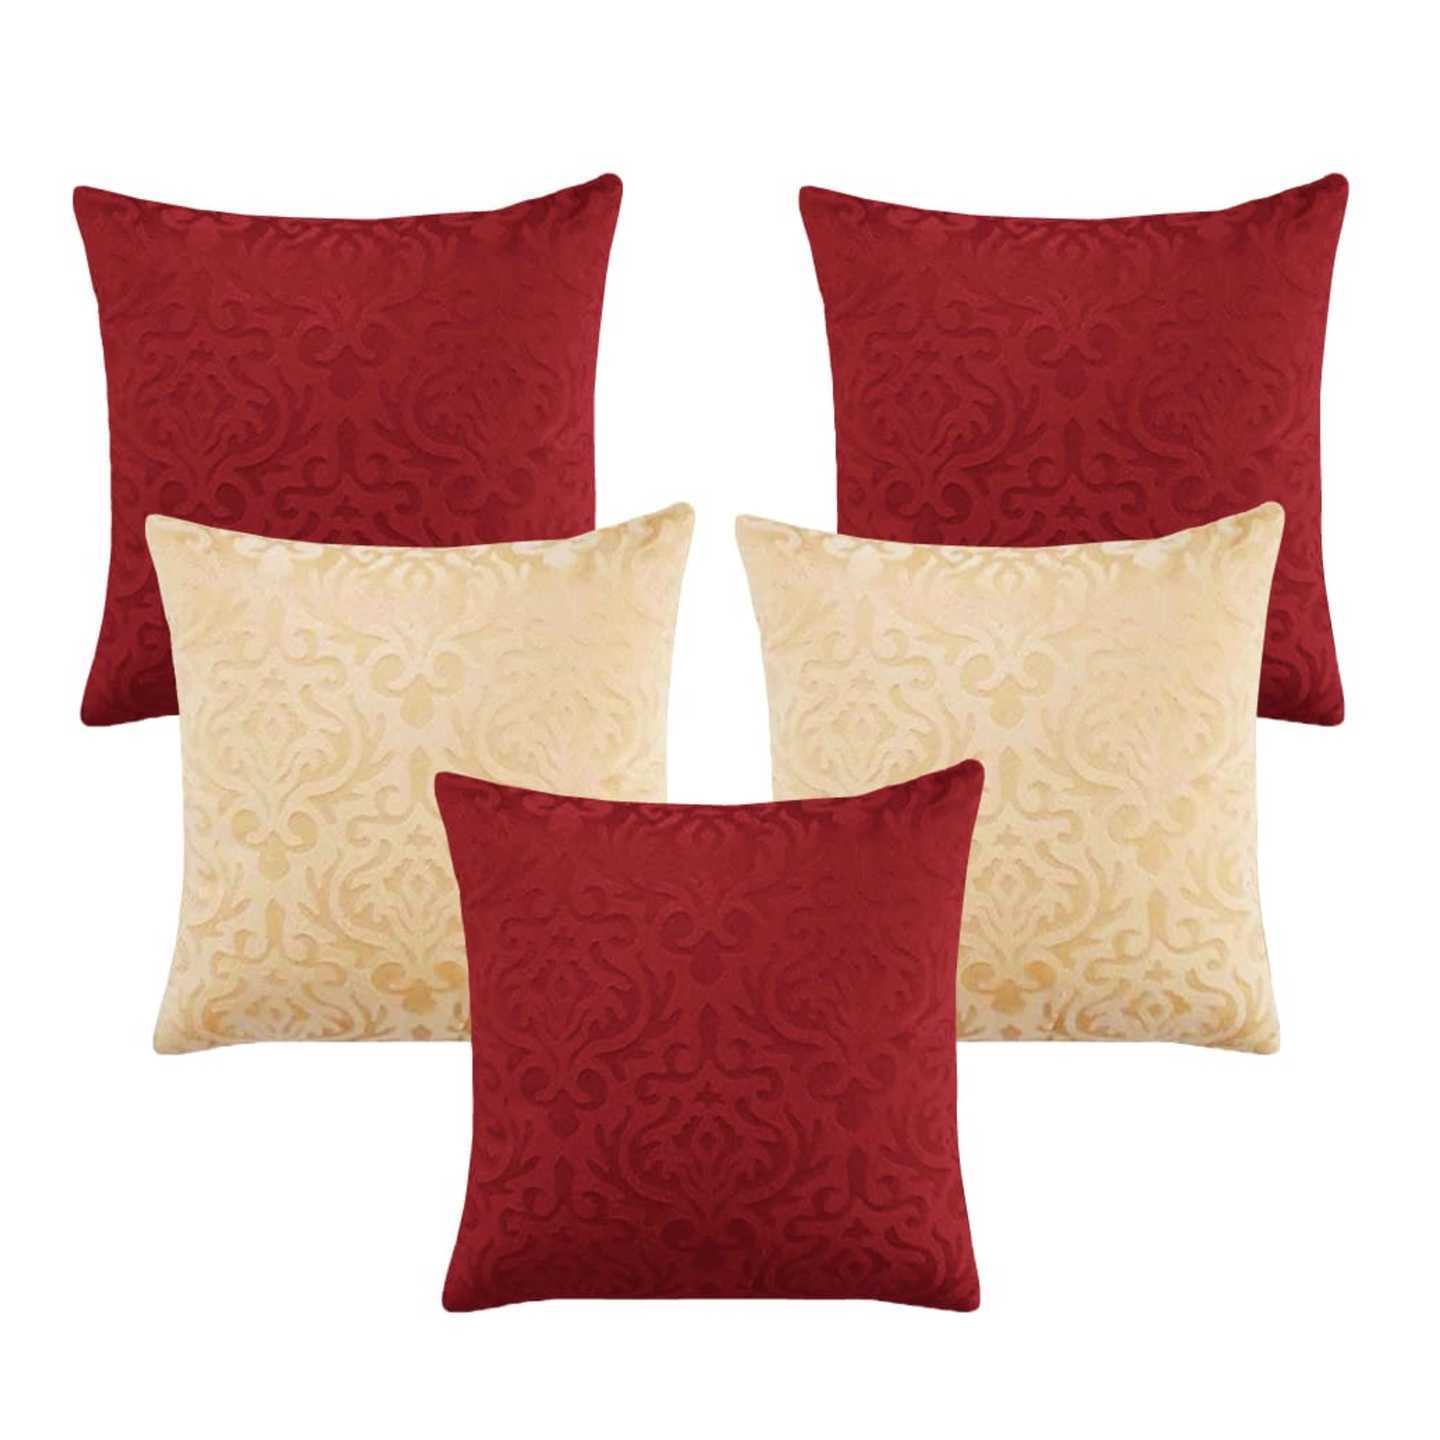 Handtex Home Velvet Cushion Covers 40.64x40.64 cm16x16 inches, Multicolour - Set of 5 Maroon - Beige